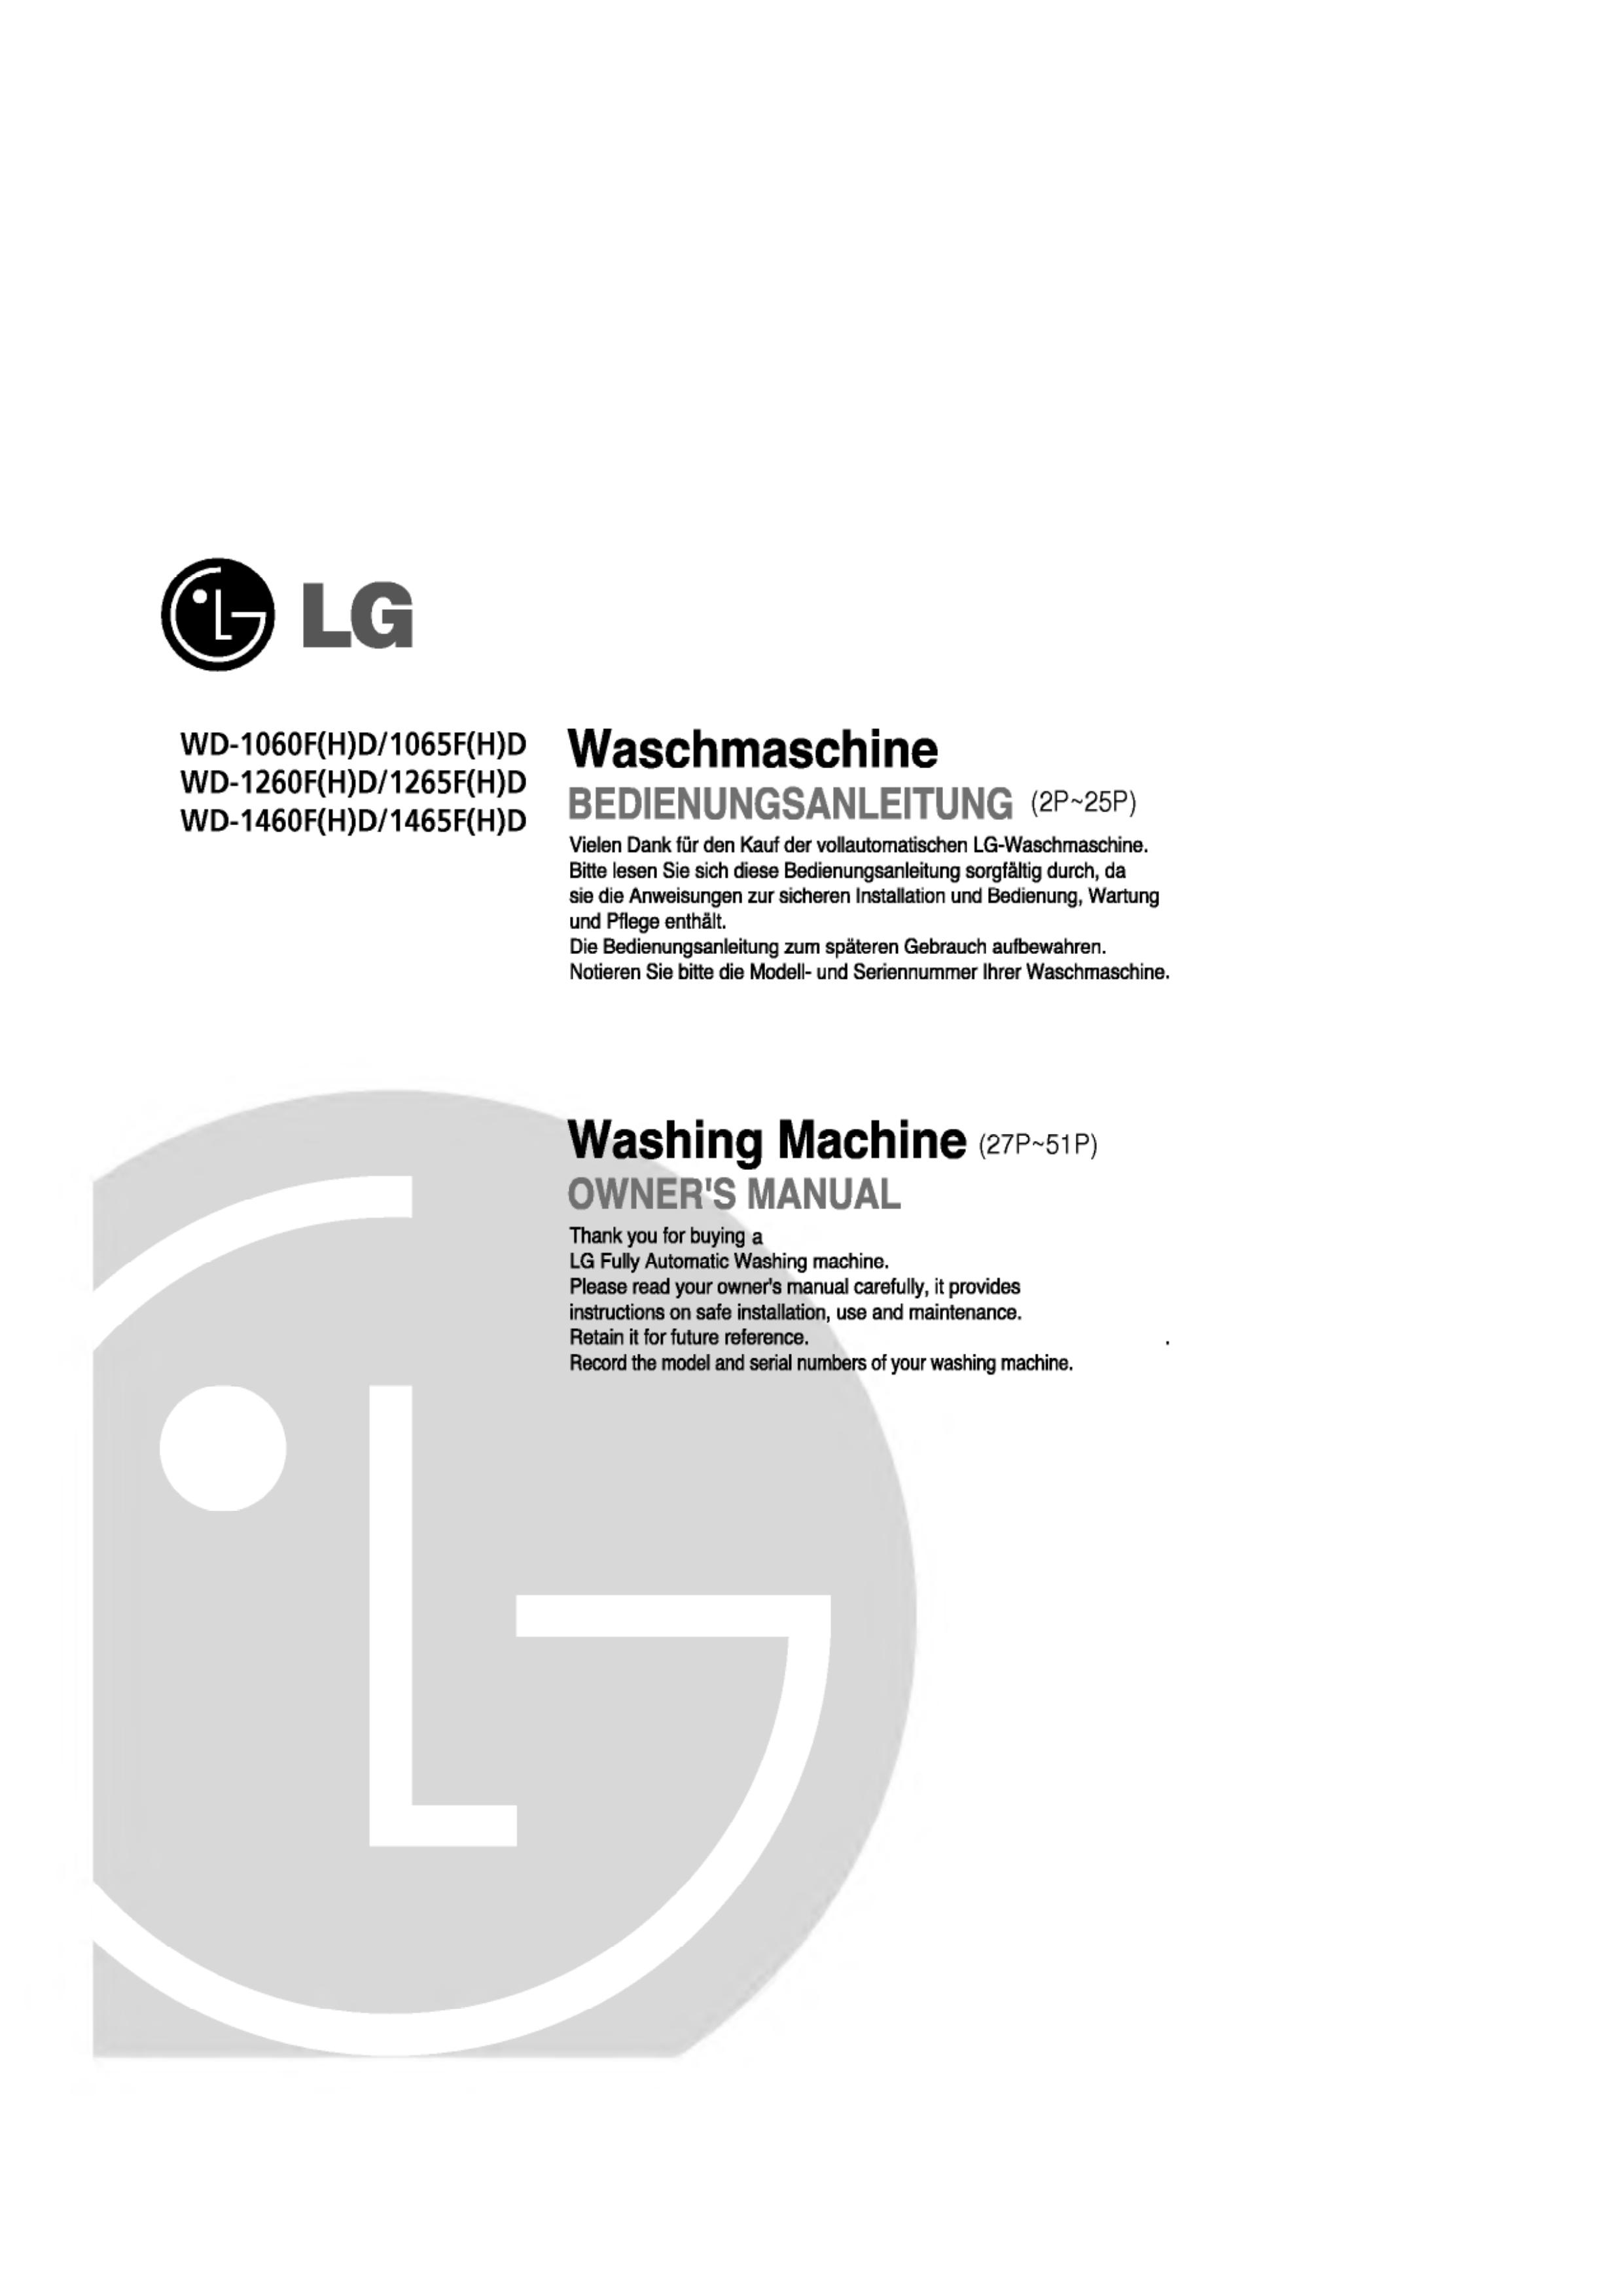 LG Electronics 1065F(H)D Washer User Manual